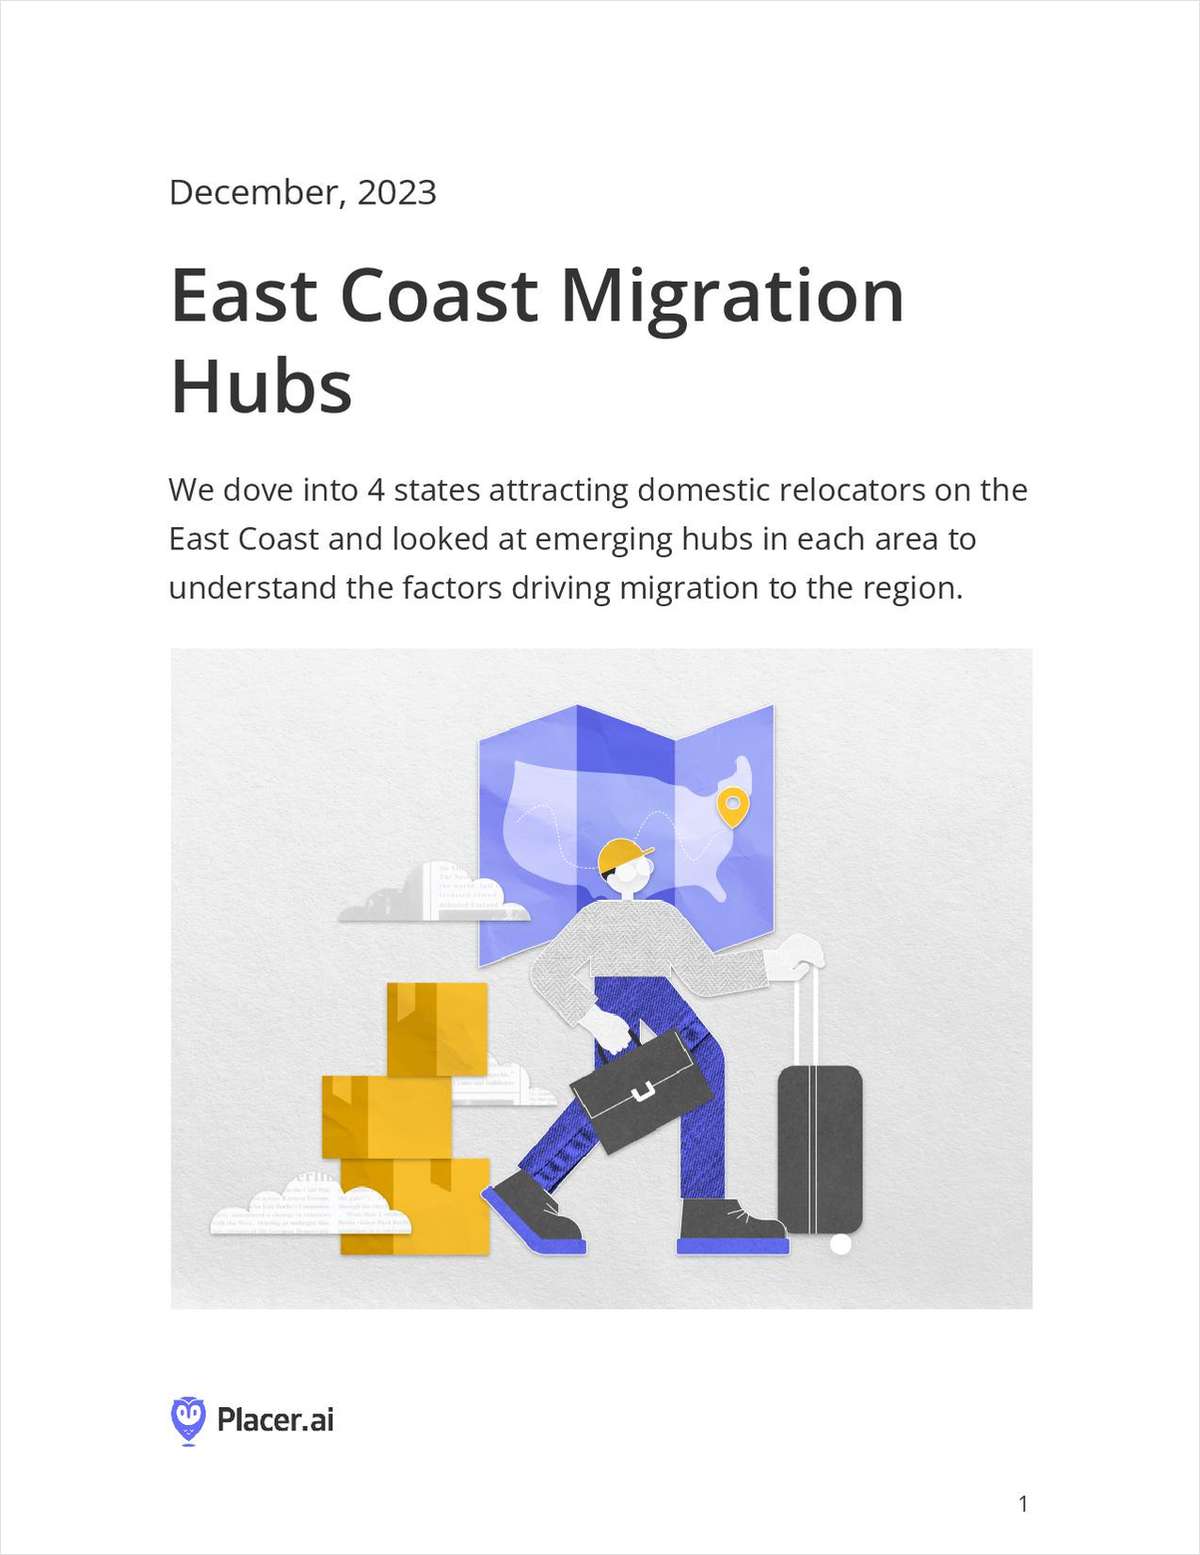 East Coast Migration Hubs: 4 States Attracting Domestic Relocators